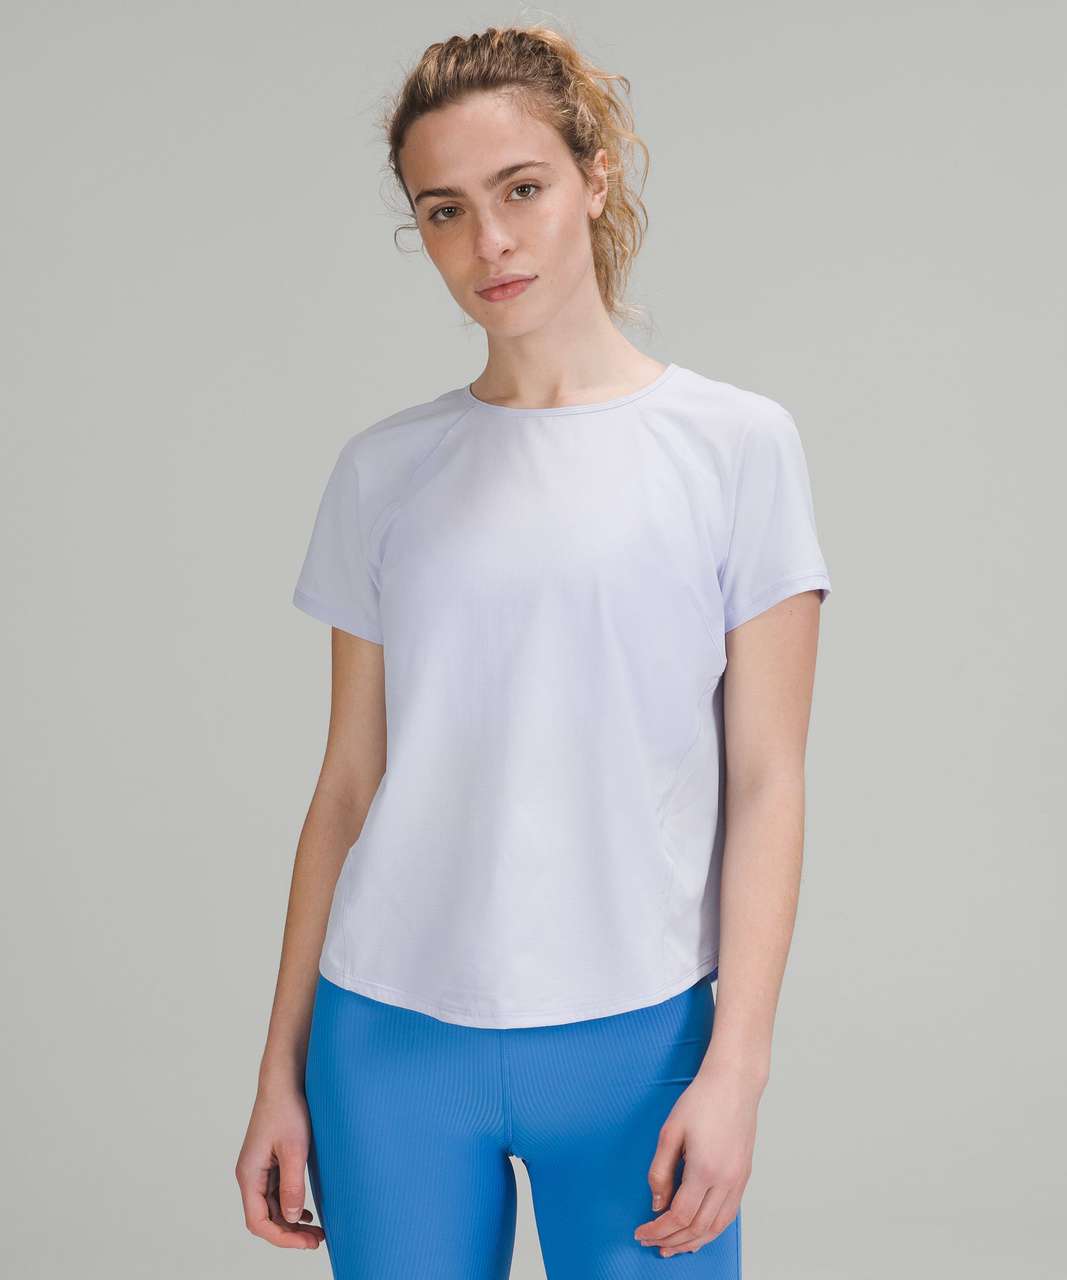 Lululemon Lightweight Stretch Running Short Sleeve Shirt - Pastel Blue